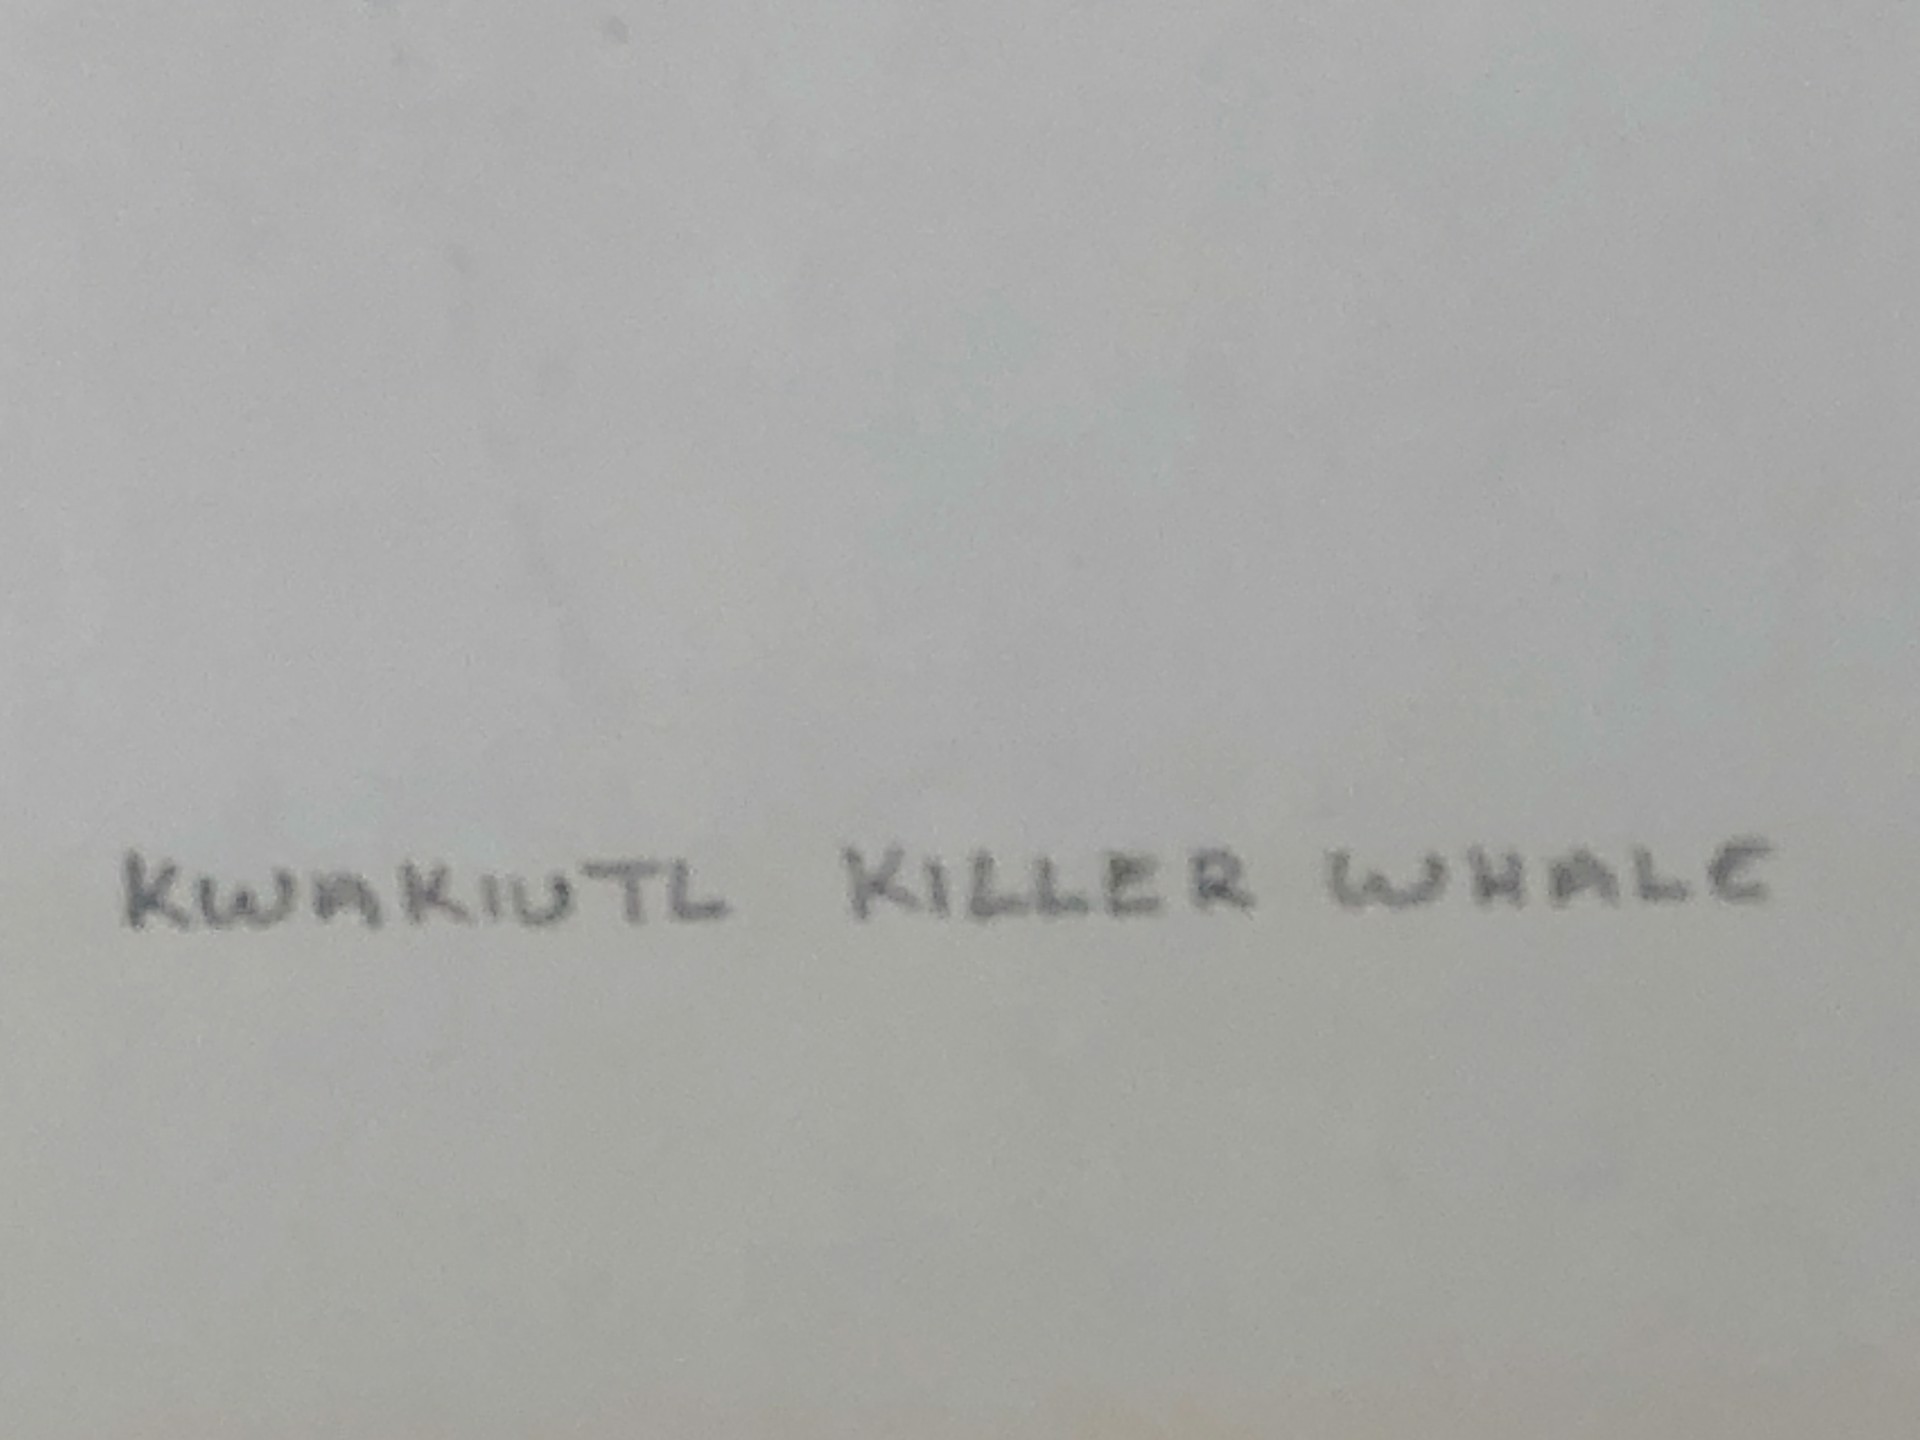 Kwakiutl Killer Whale by Tony Hunt, Sr.